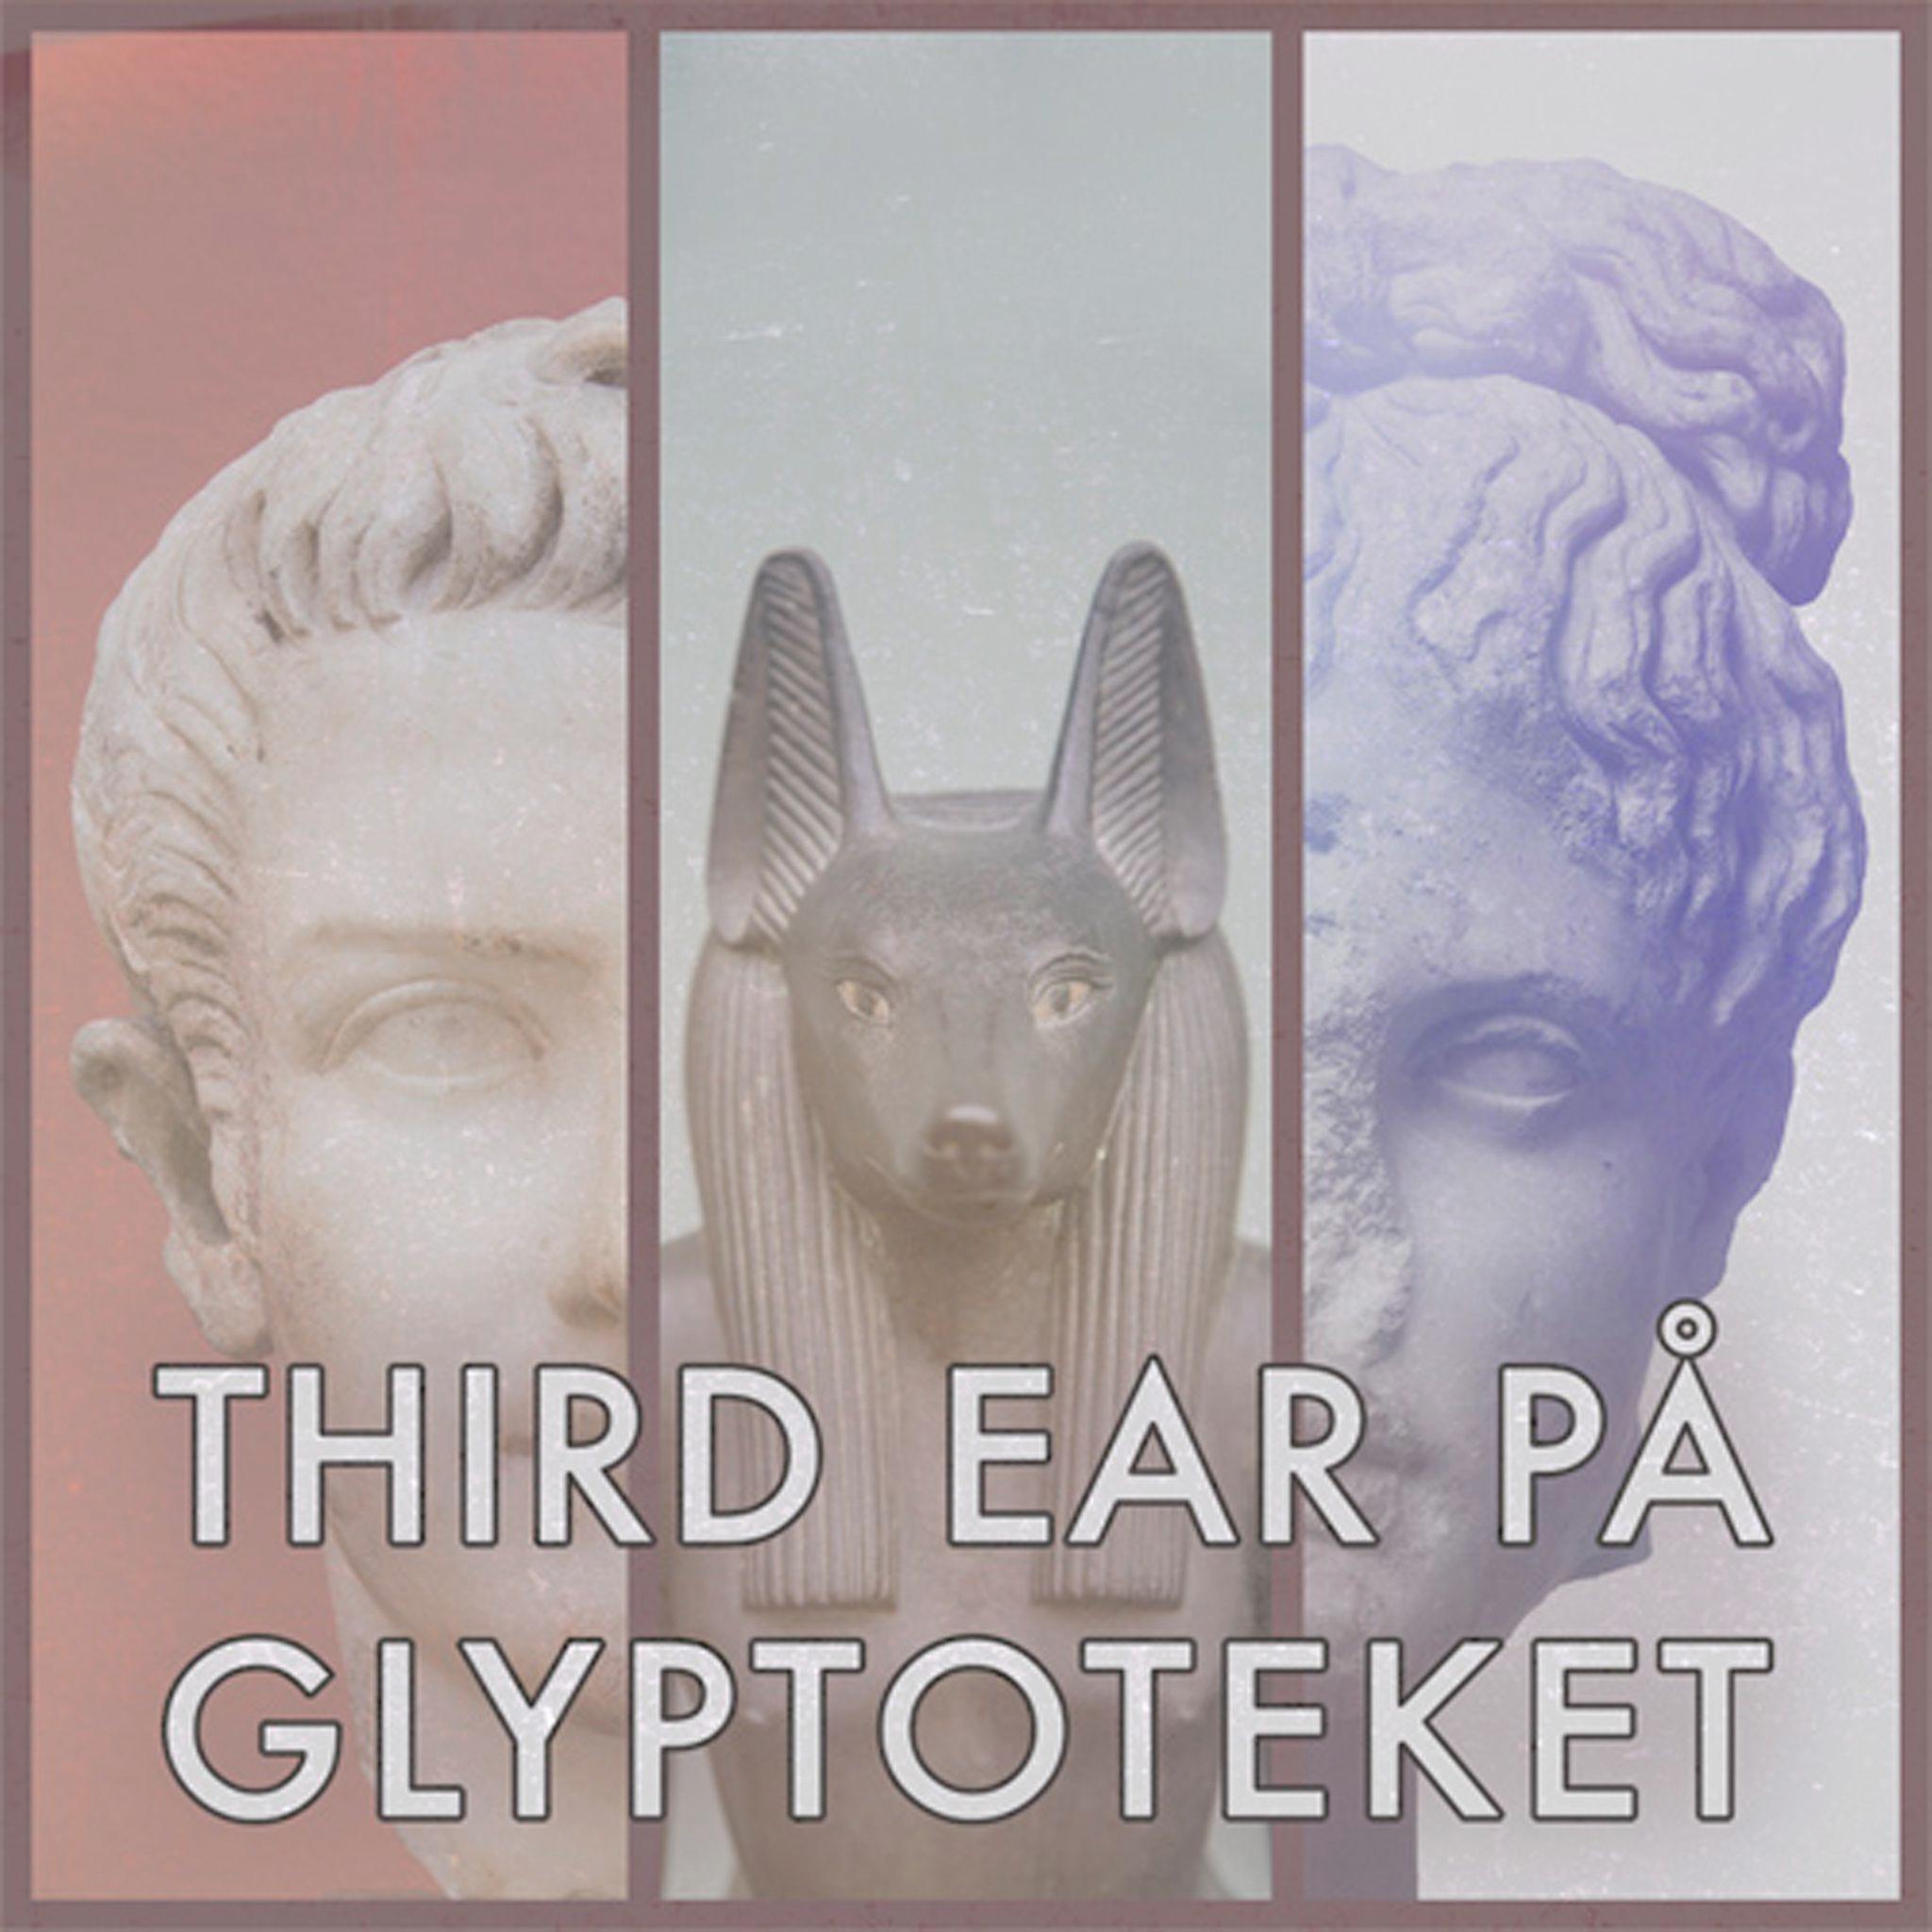 Third Ear på Glyptoteket